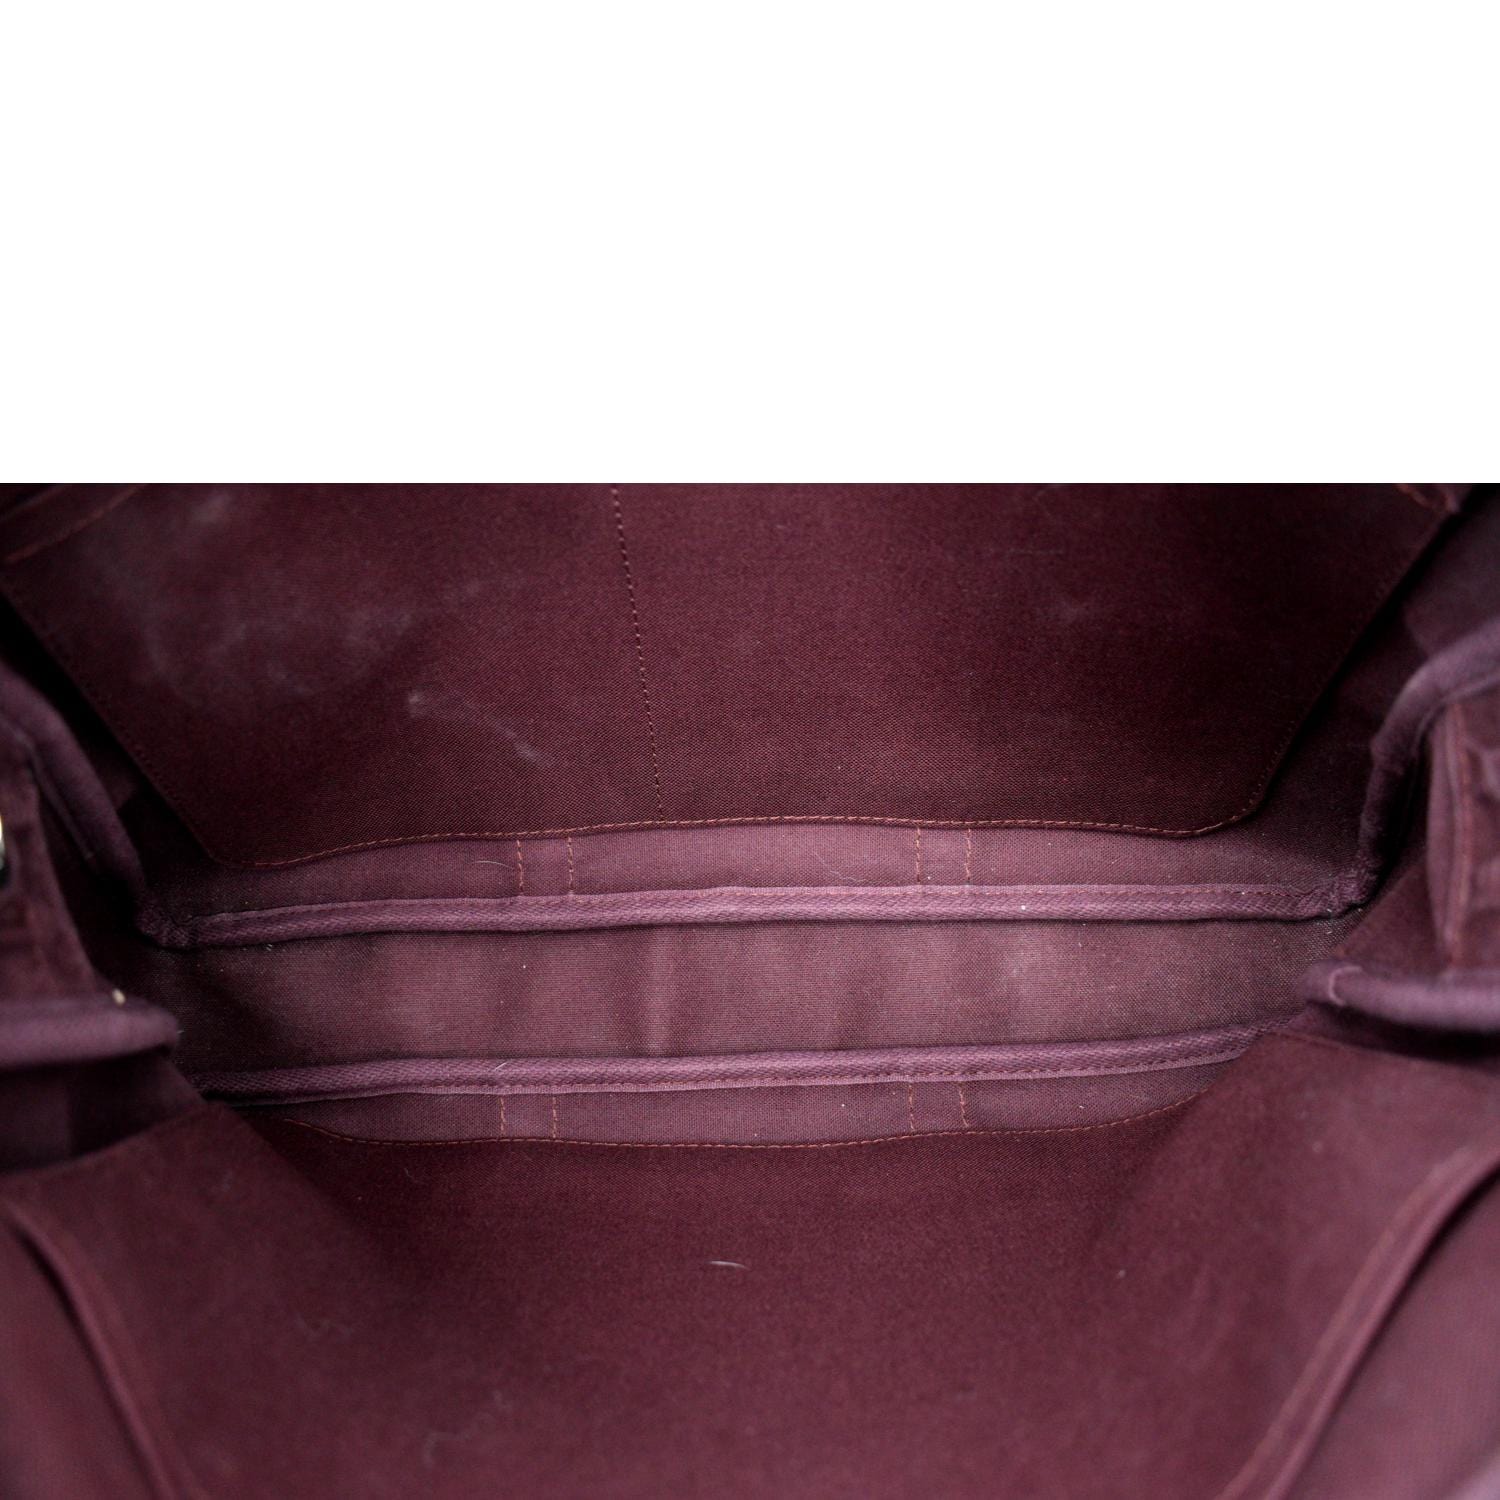 Porte documents voyage cloth bag Louis Vuitton Brown in Cloth - 20553998